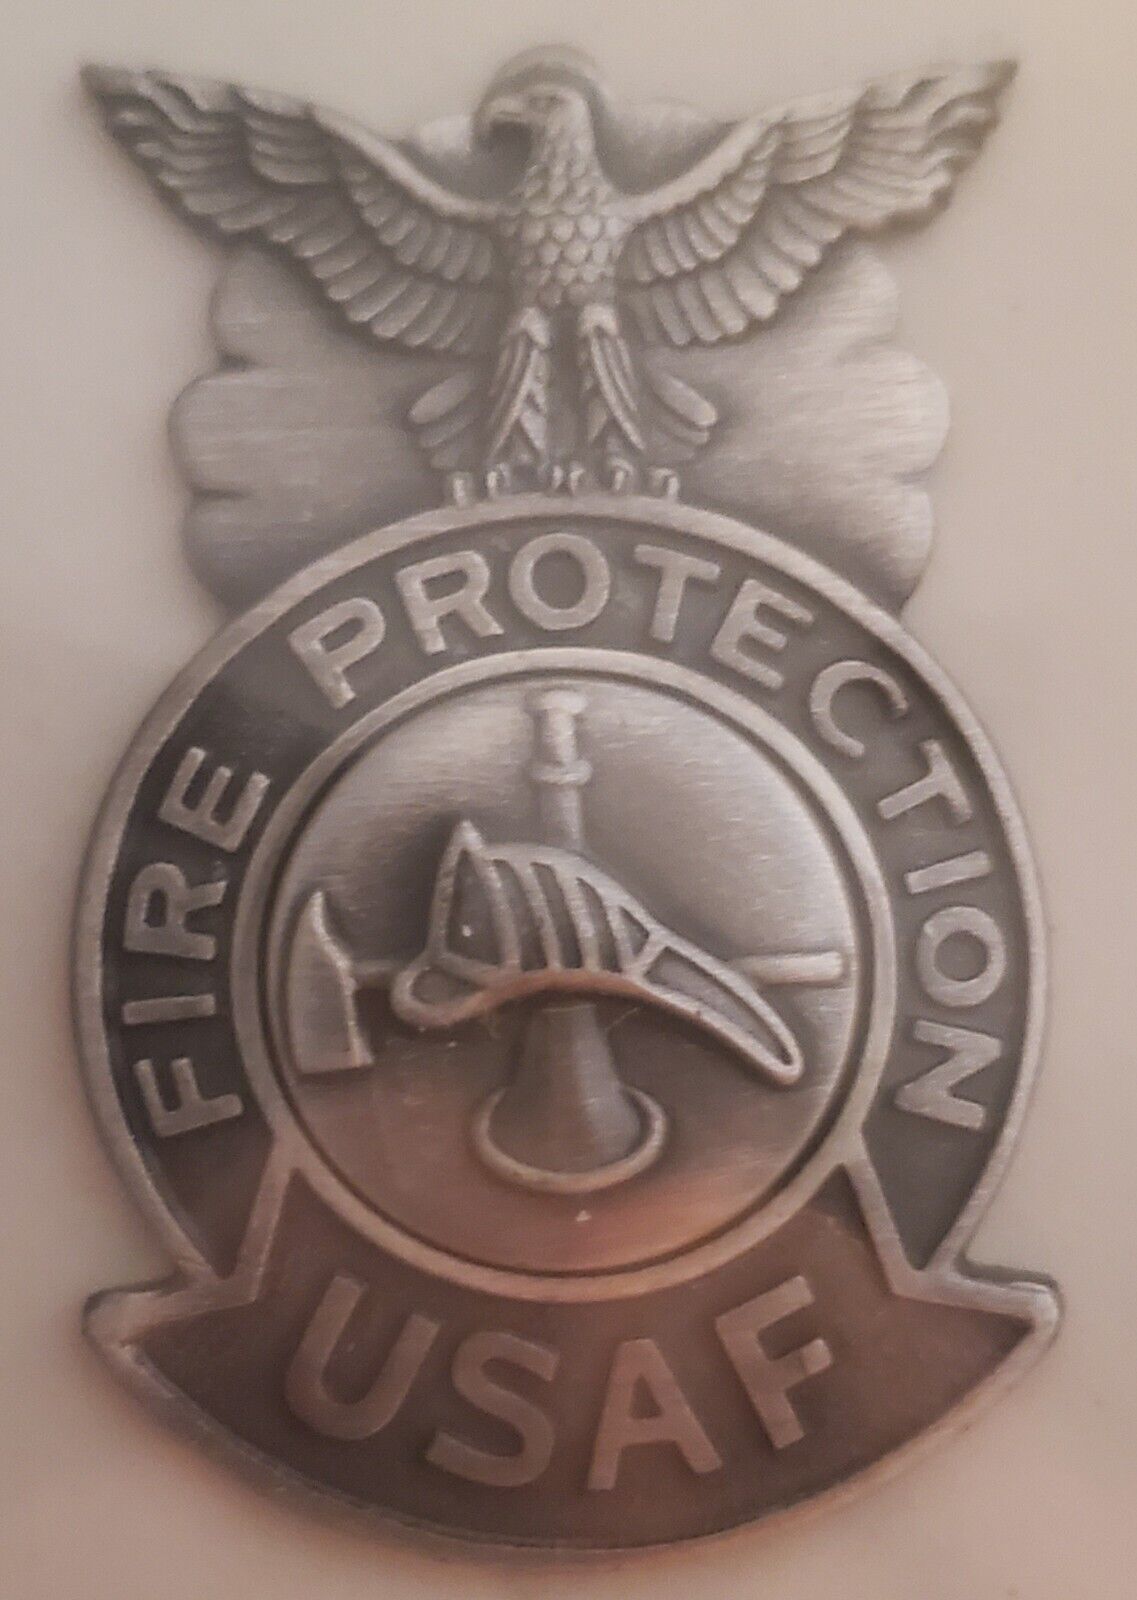 USAF Fire Protection Metal Badge New Unused In Original Box 1984 Air Force mini